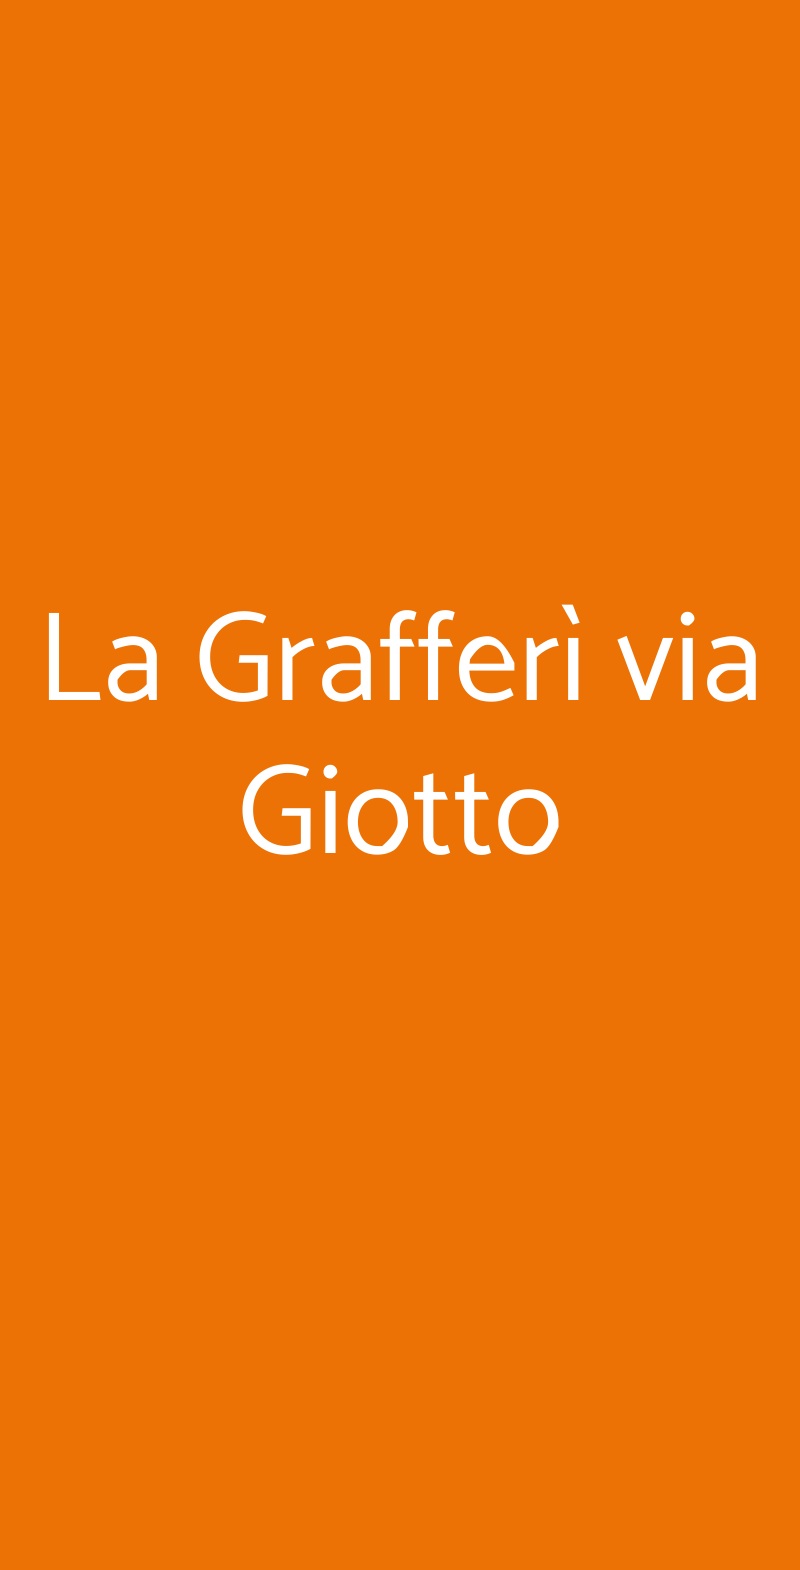 La Grafferì via Giotto Napoli menù 1 pagina